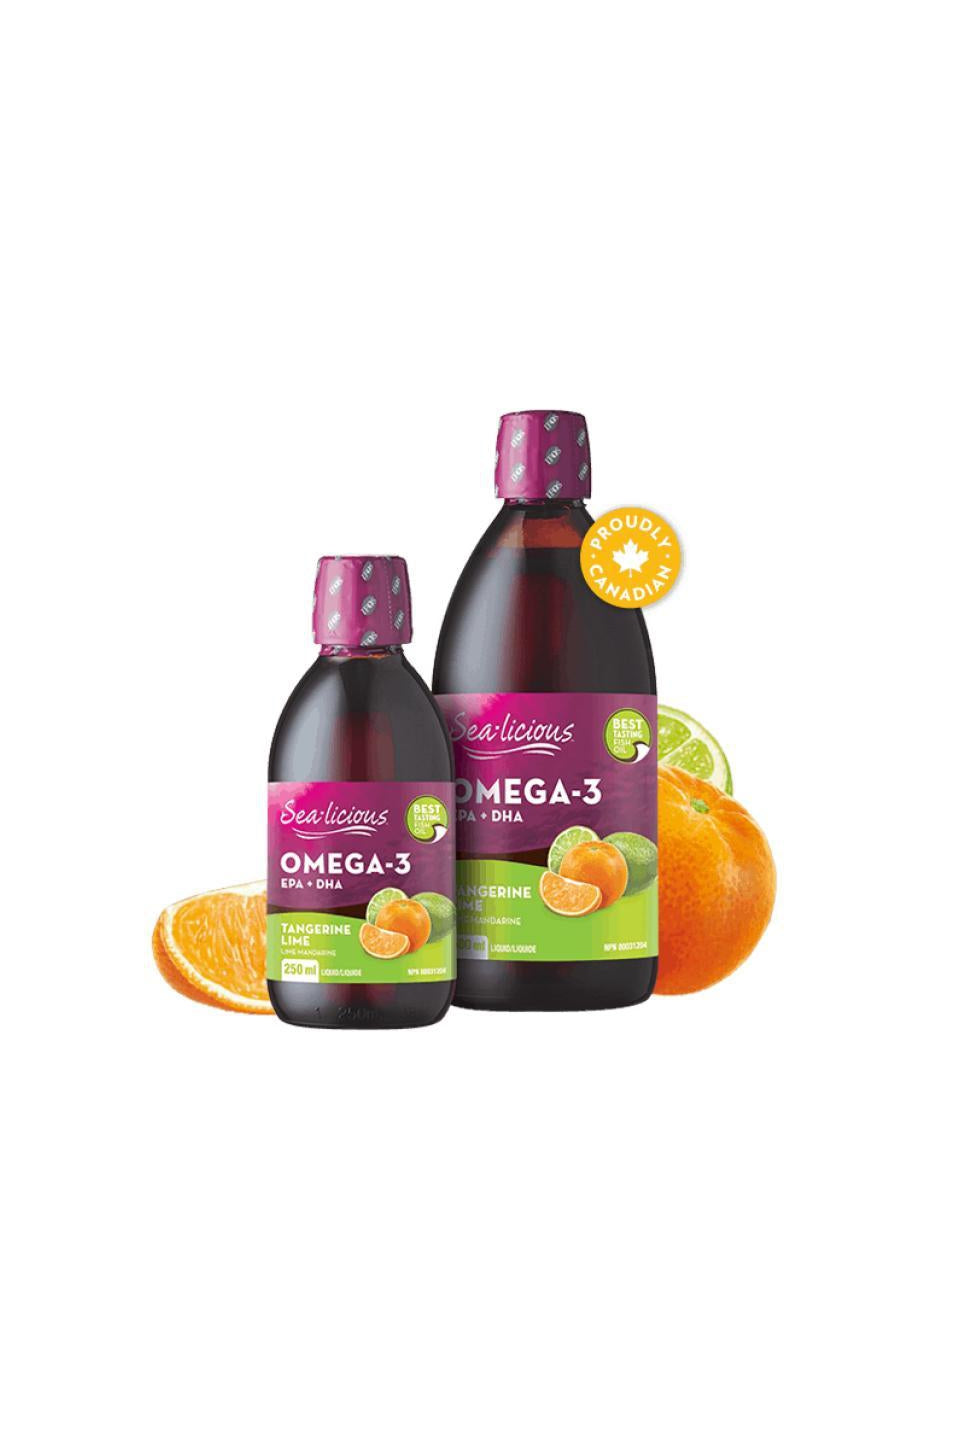 Sealicious Omega-3 EPA + DHA - Tangerine Lime 250ml